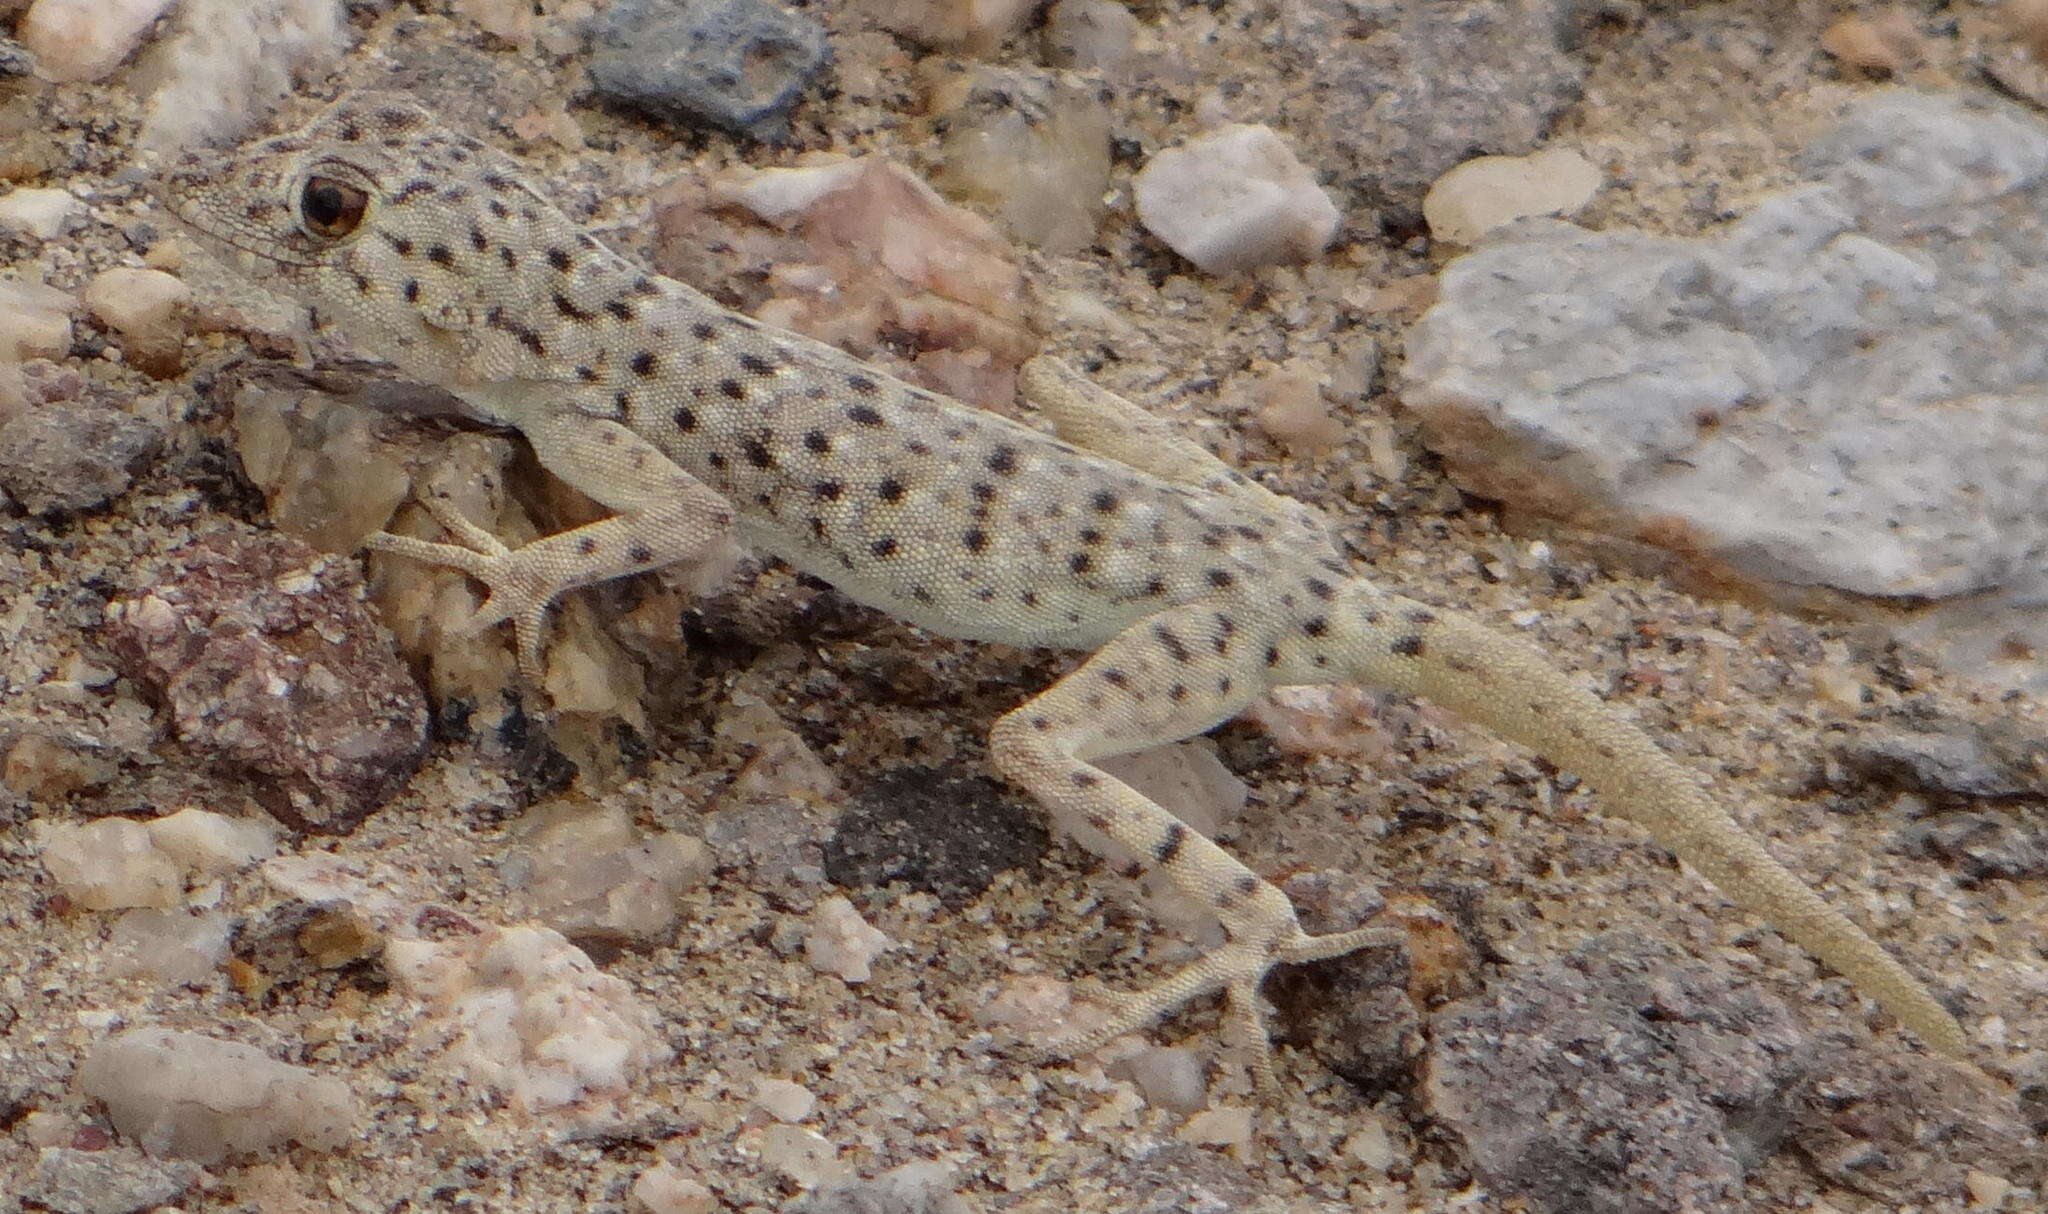 Image of Namib Day Gecko